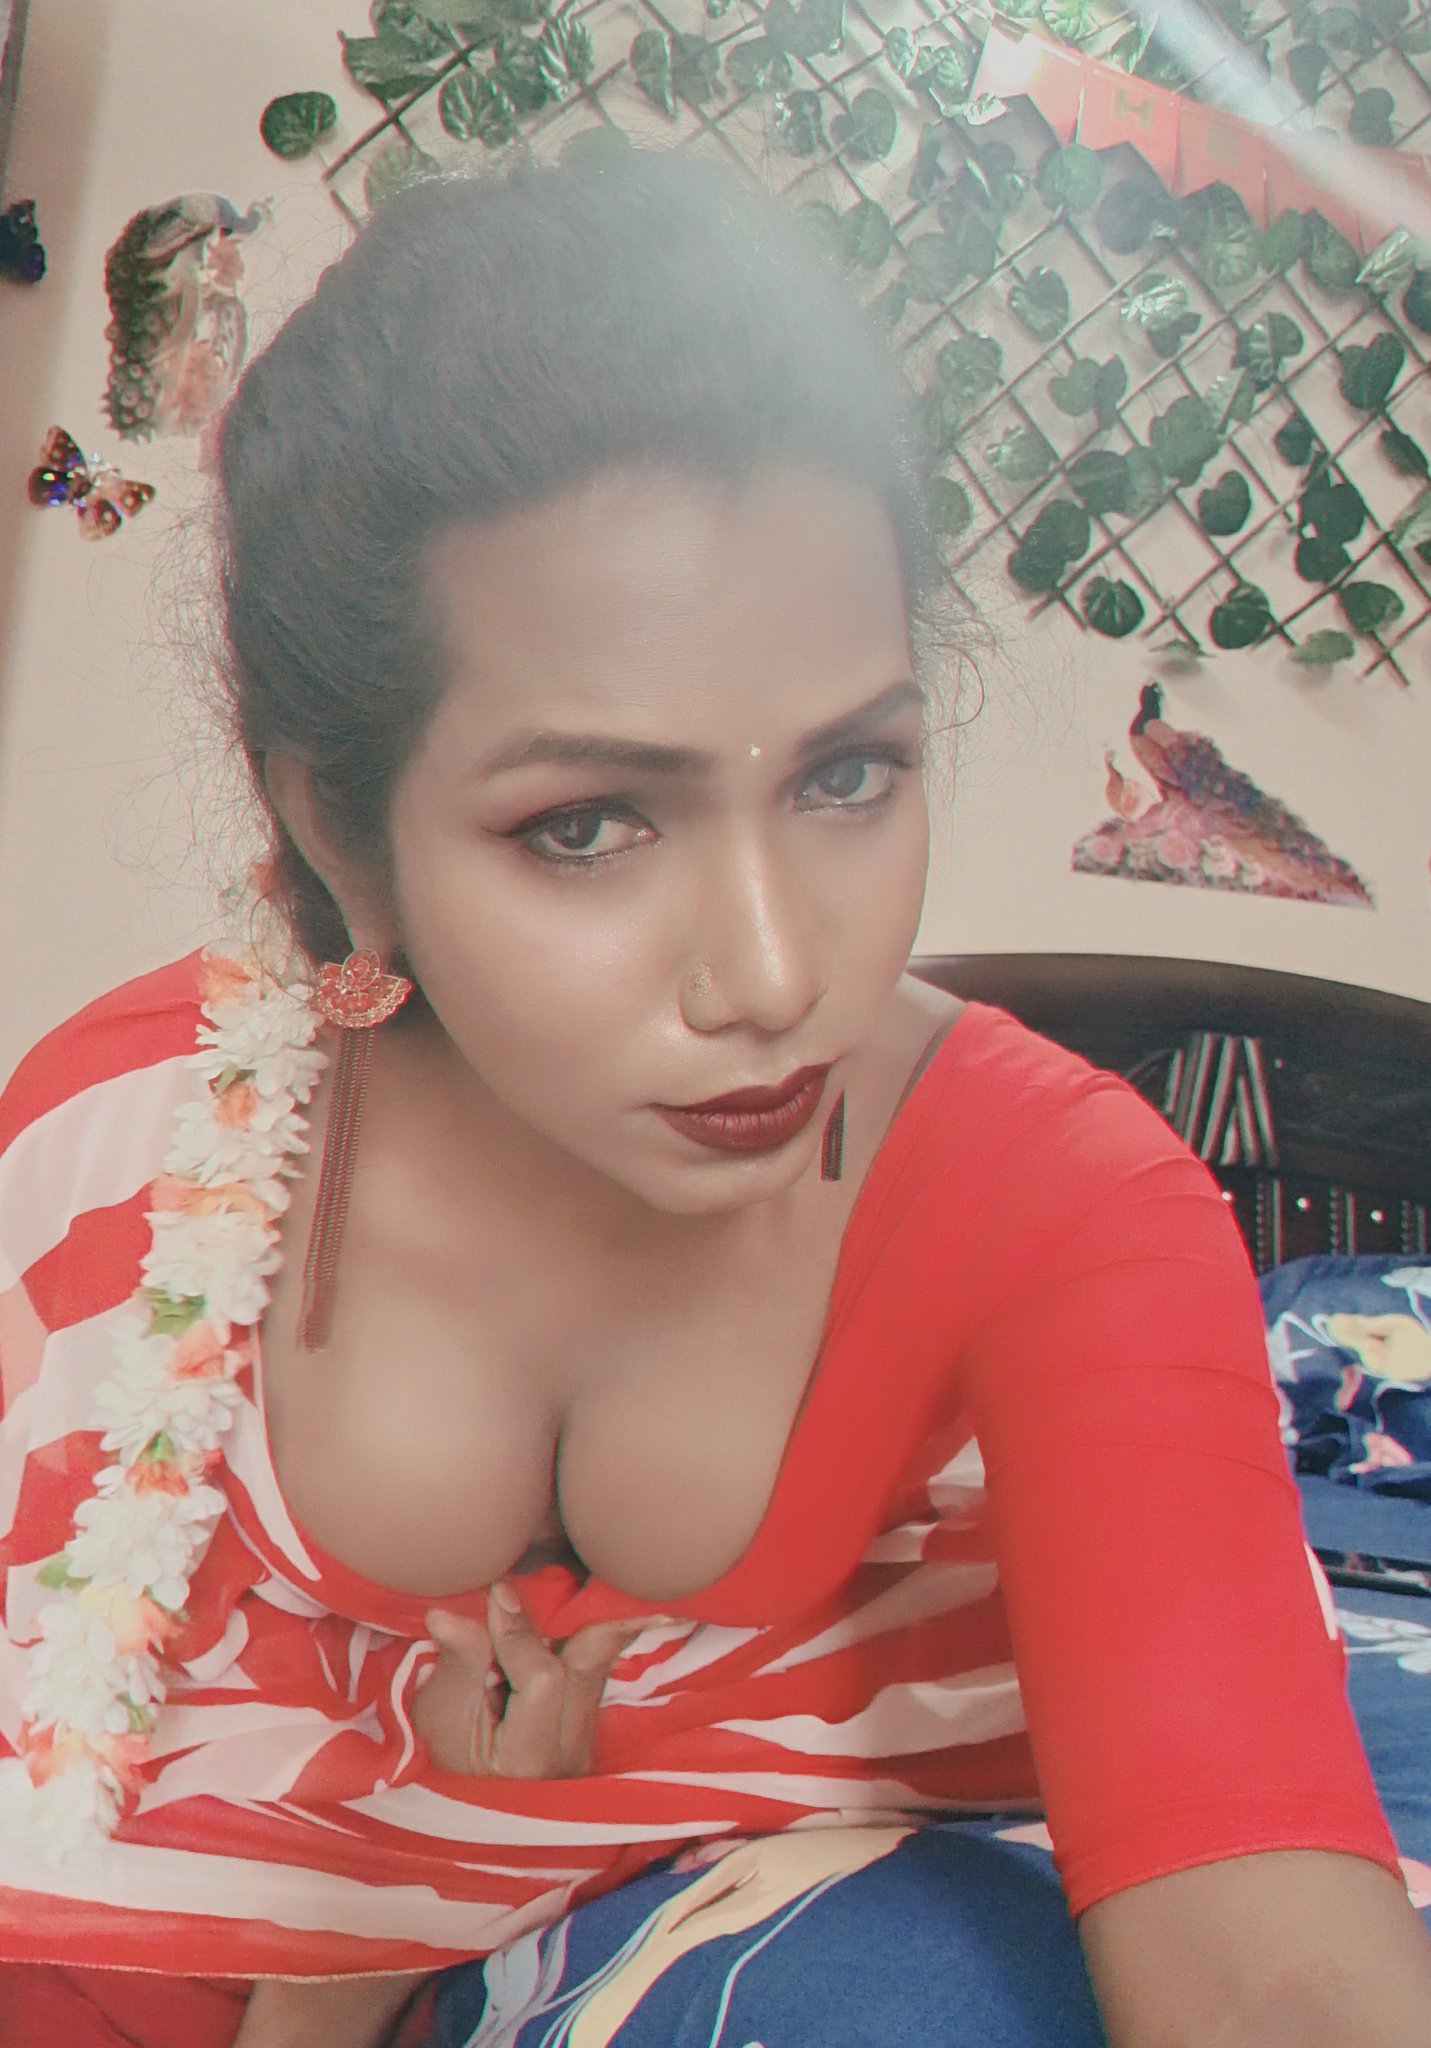 Telugu Shemale Sex Videos - indian wild shemales ðŸ‡®ðŸ‡³ðŸ‡¨ðŸ‡¦ðŸ‡¨ðŸ‡°ðŸ‡§ðŸ‡· (@Shemales07) / Twitter